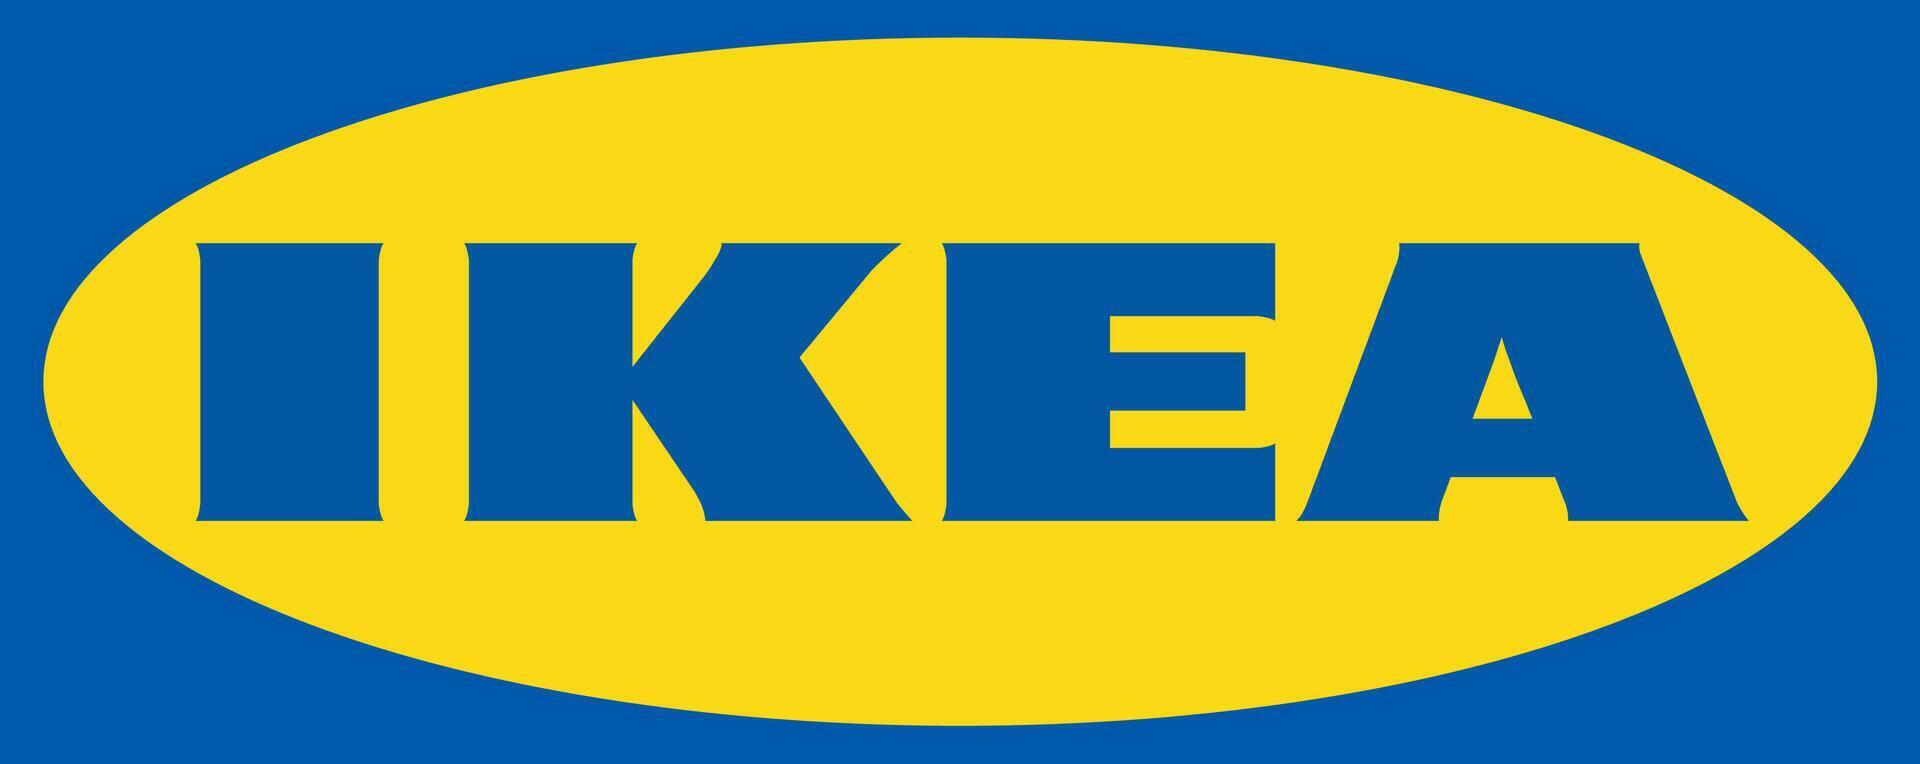 IKEA logotype, logo vector